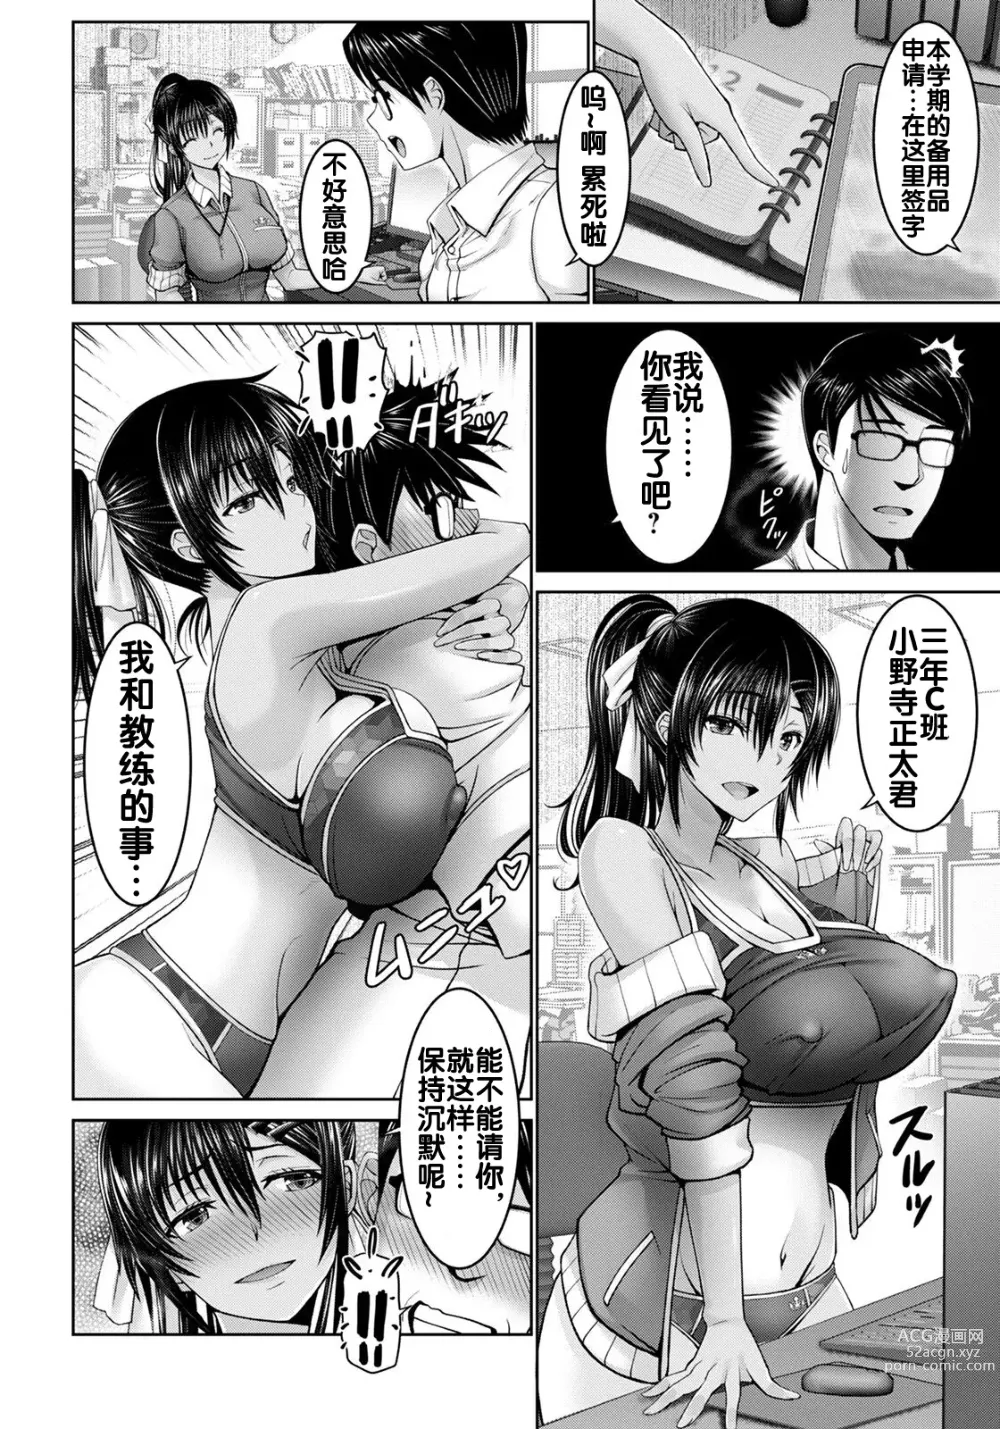 Page 9 of manga Seishun Taiiku Kyoushi